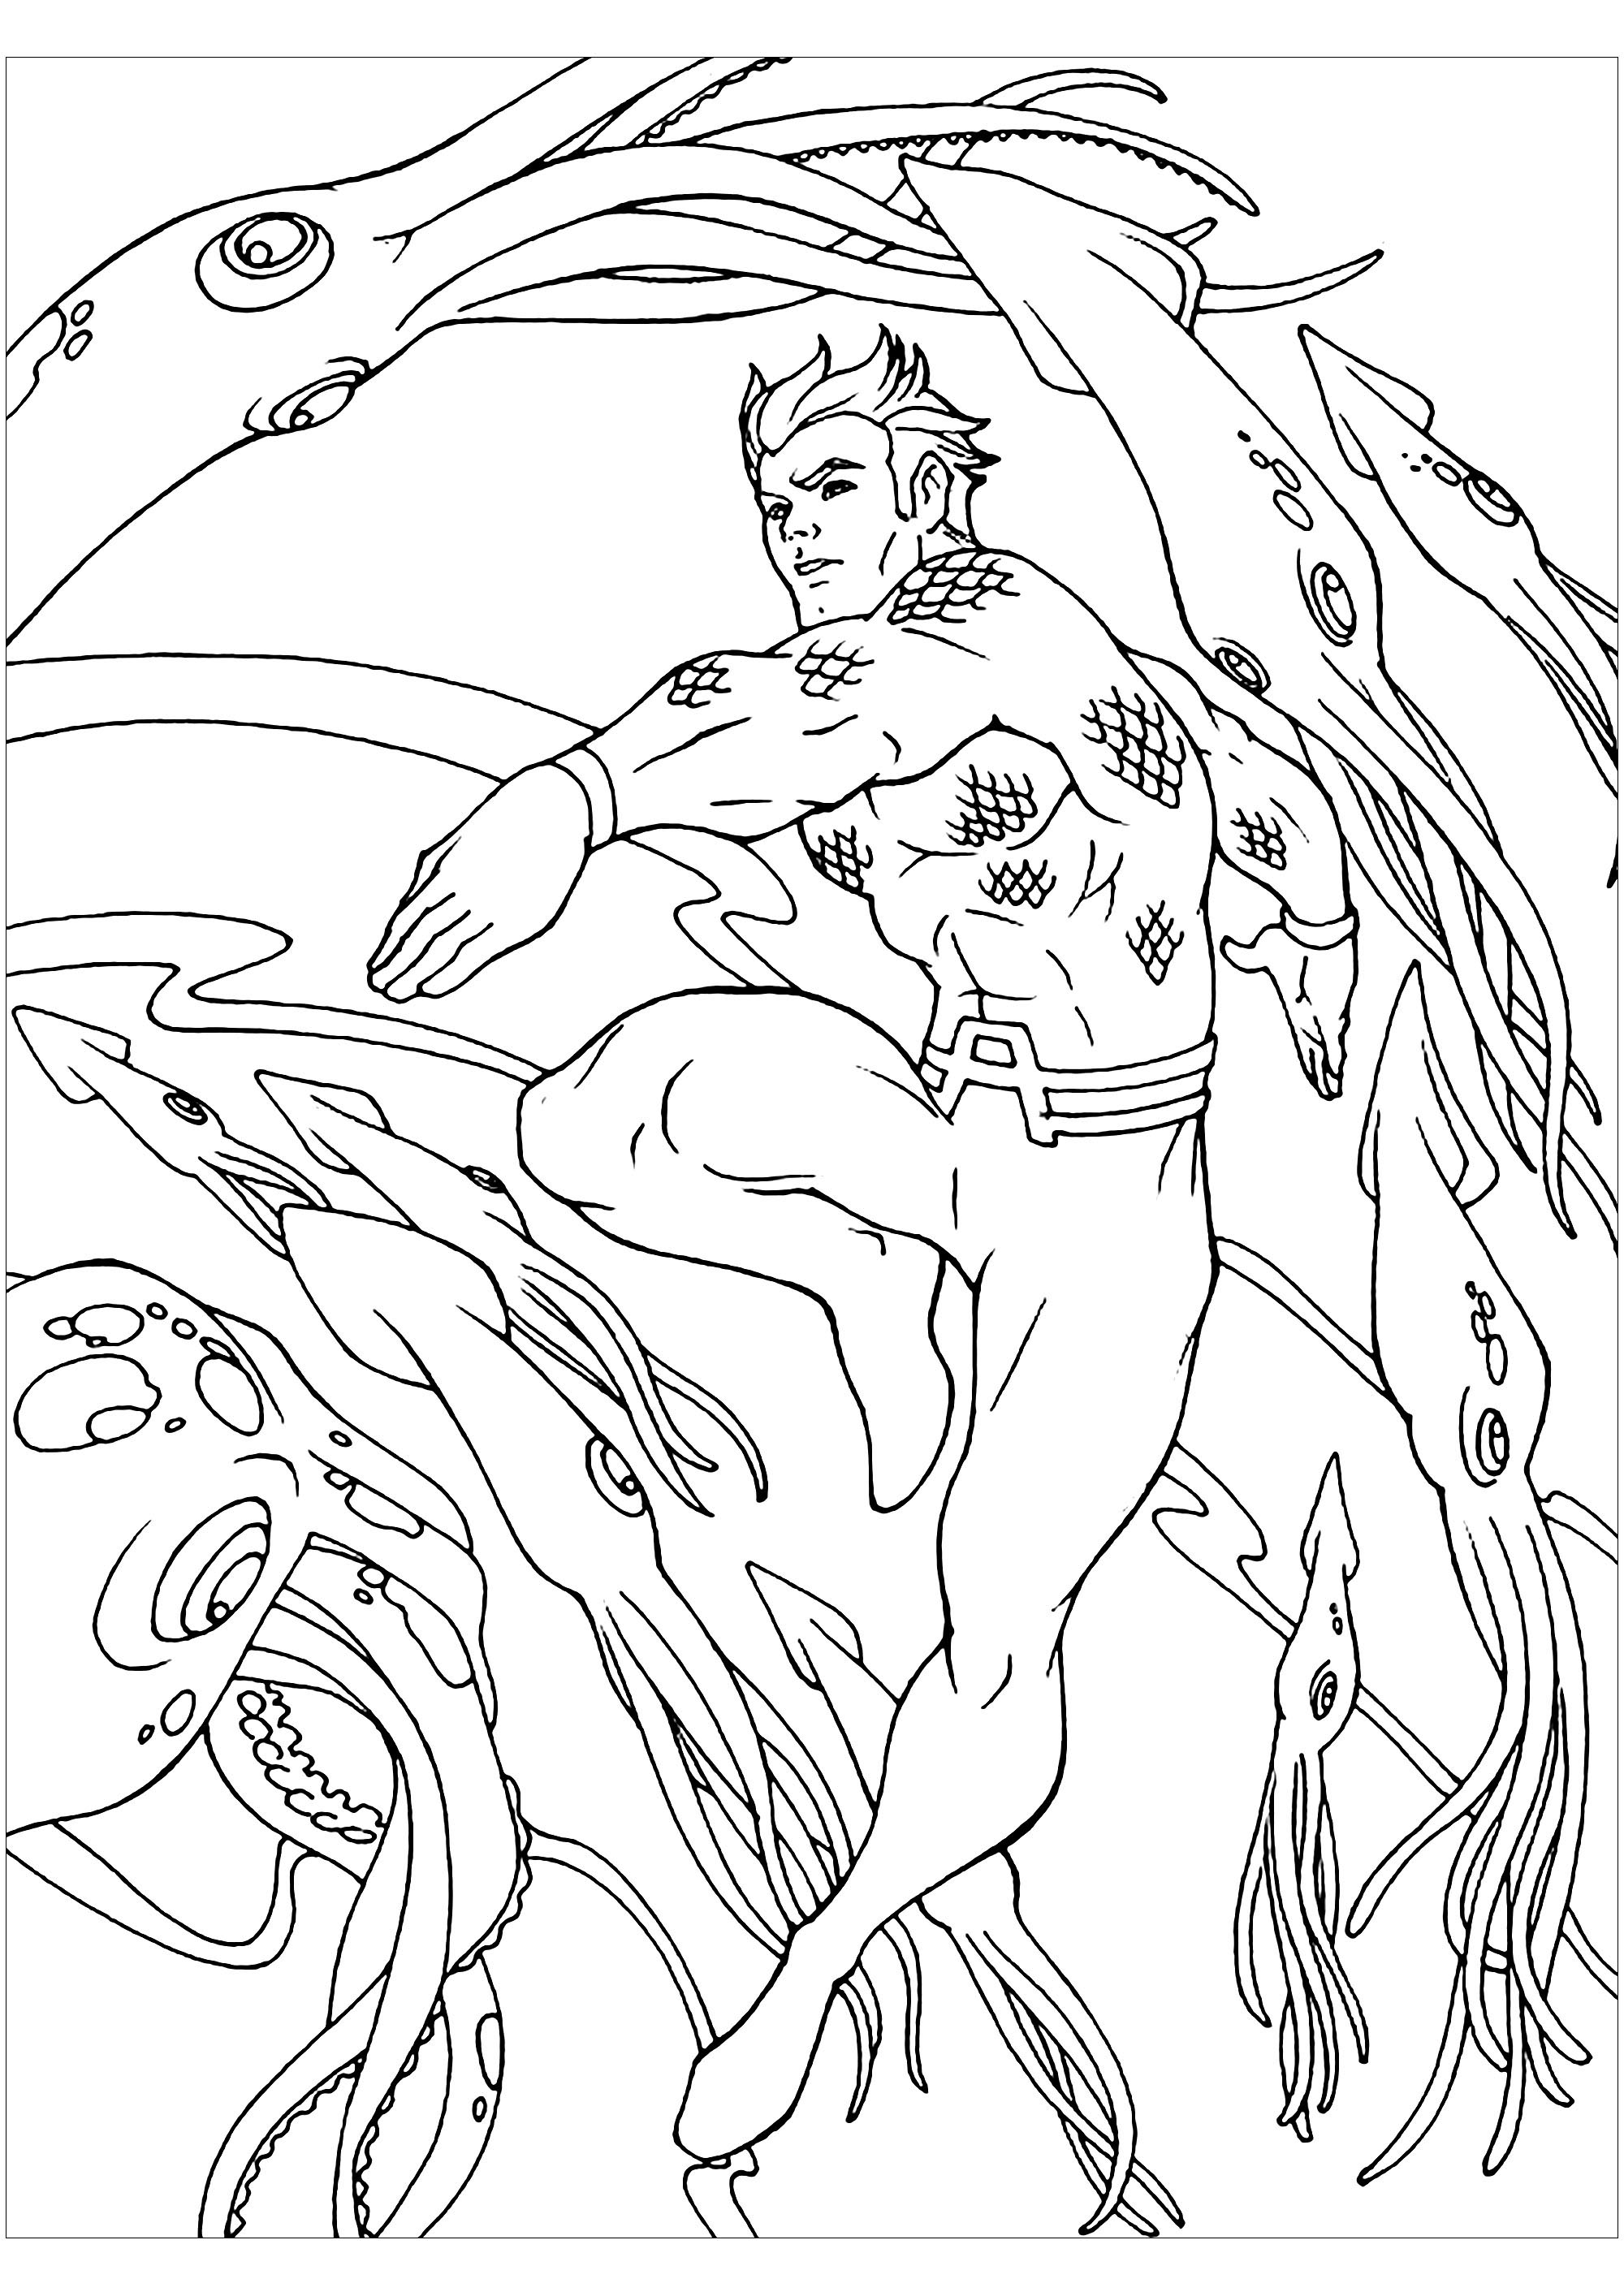 Dibujo de Aquaman para descargar e imprimir para niños